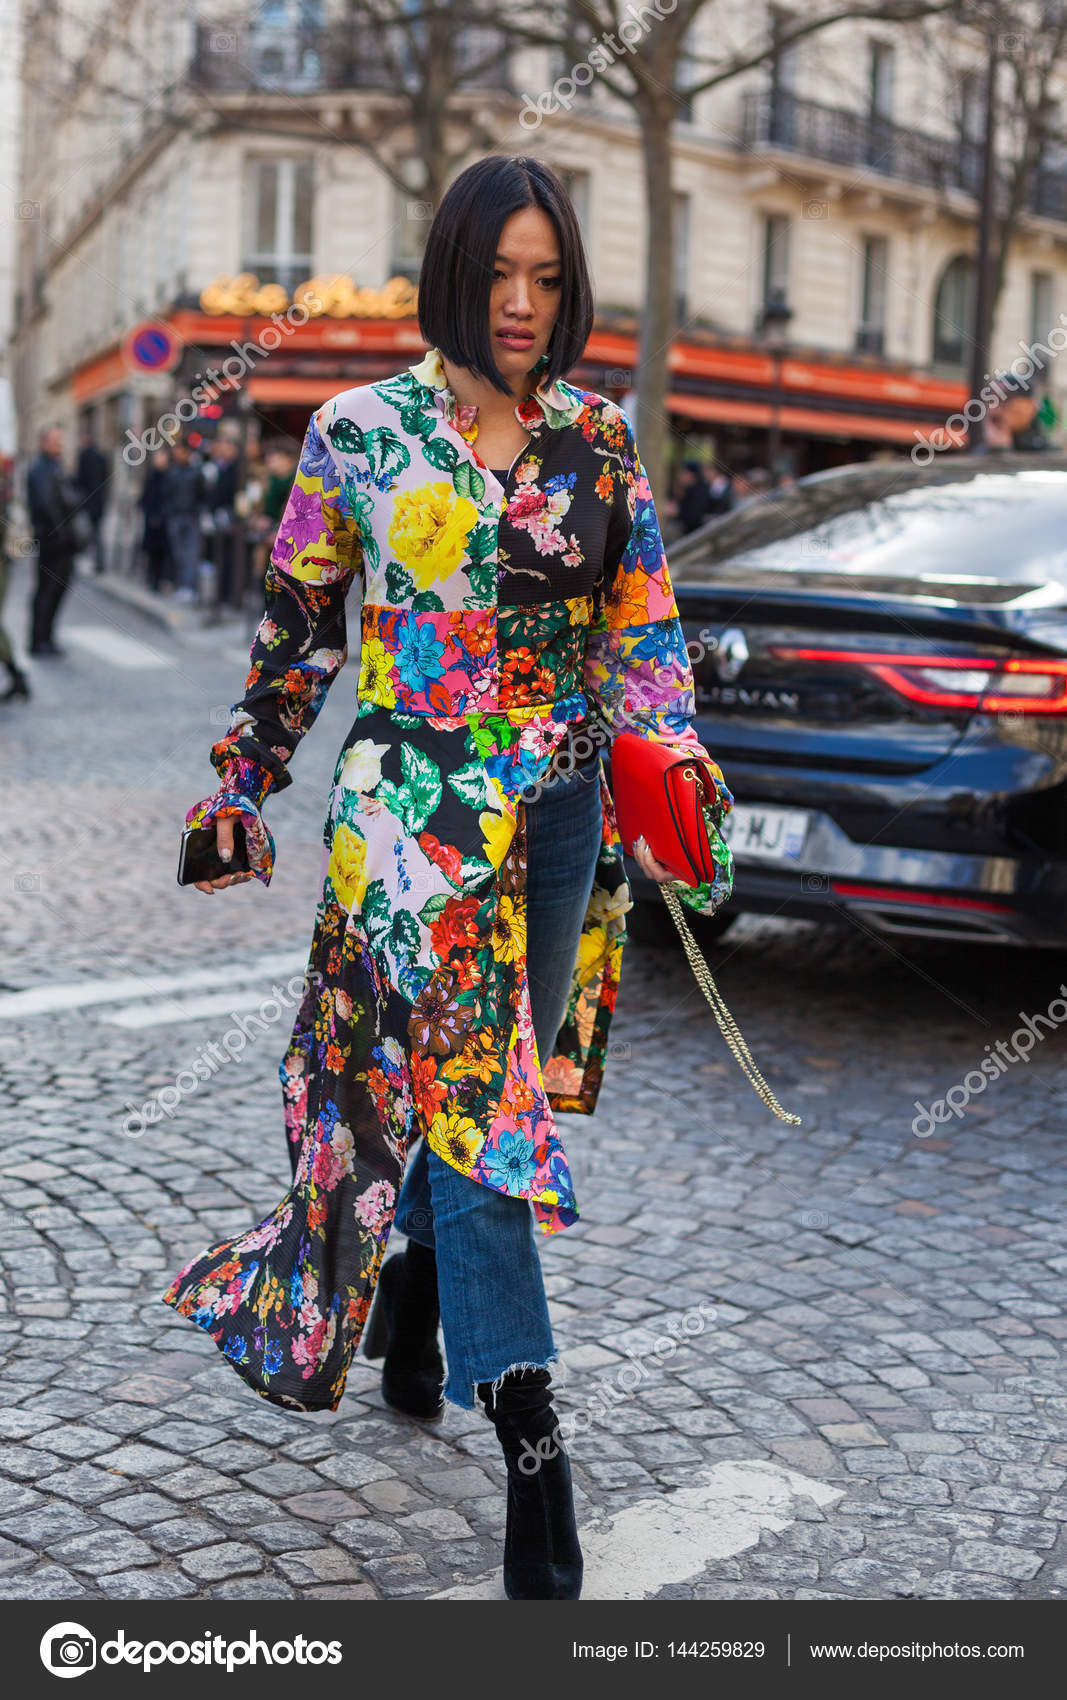 Paris Fashion Week: Street Style Fashion Photography — PCA